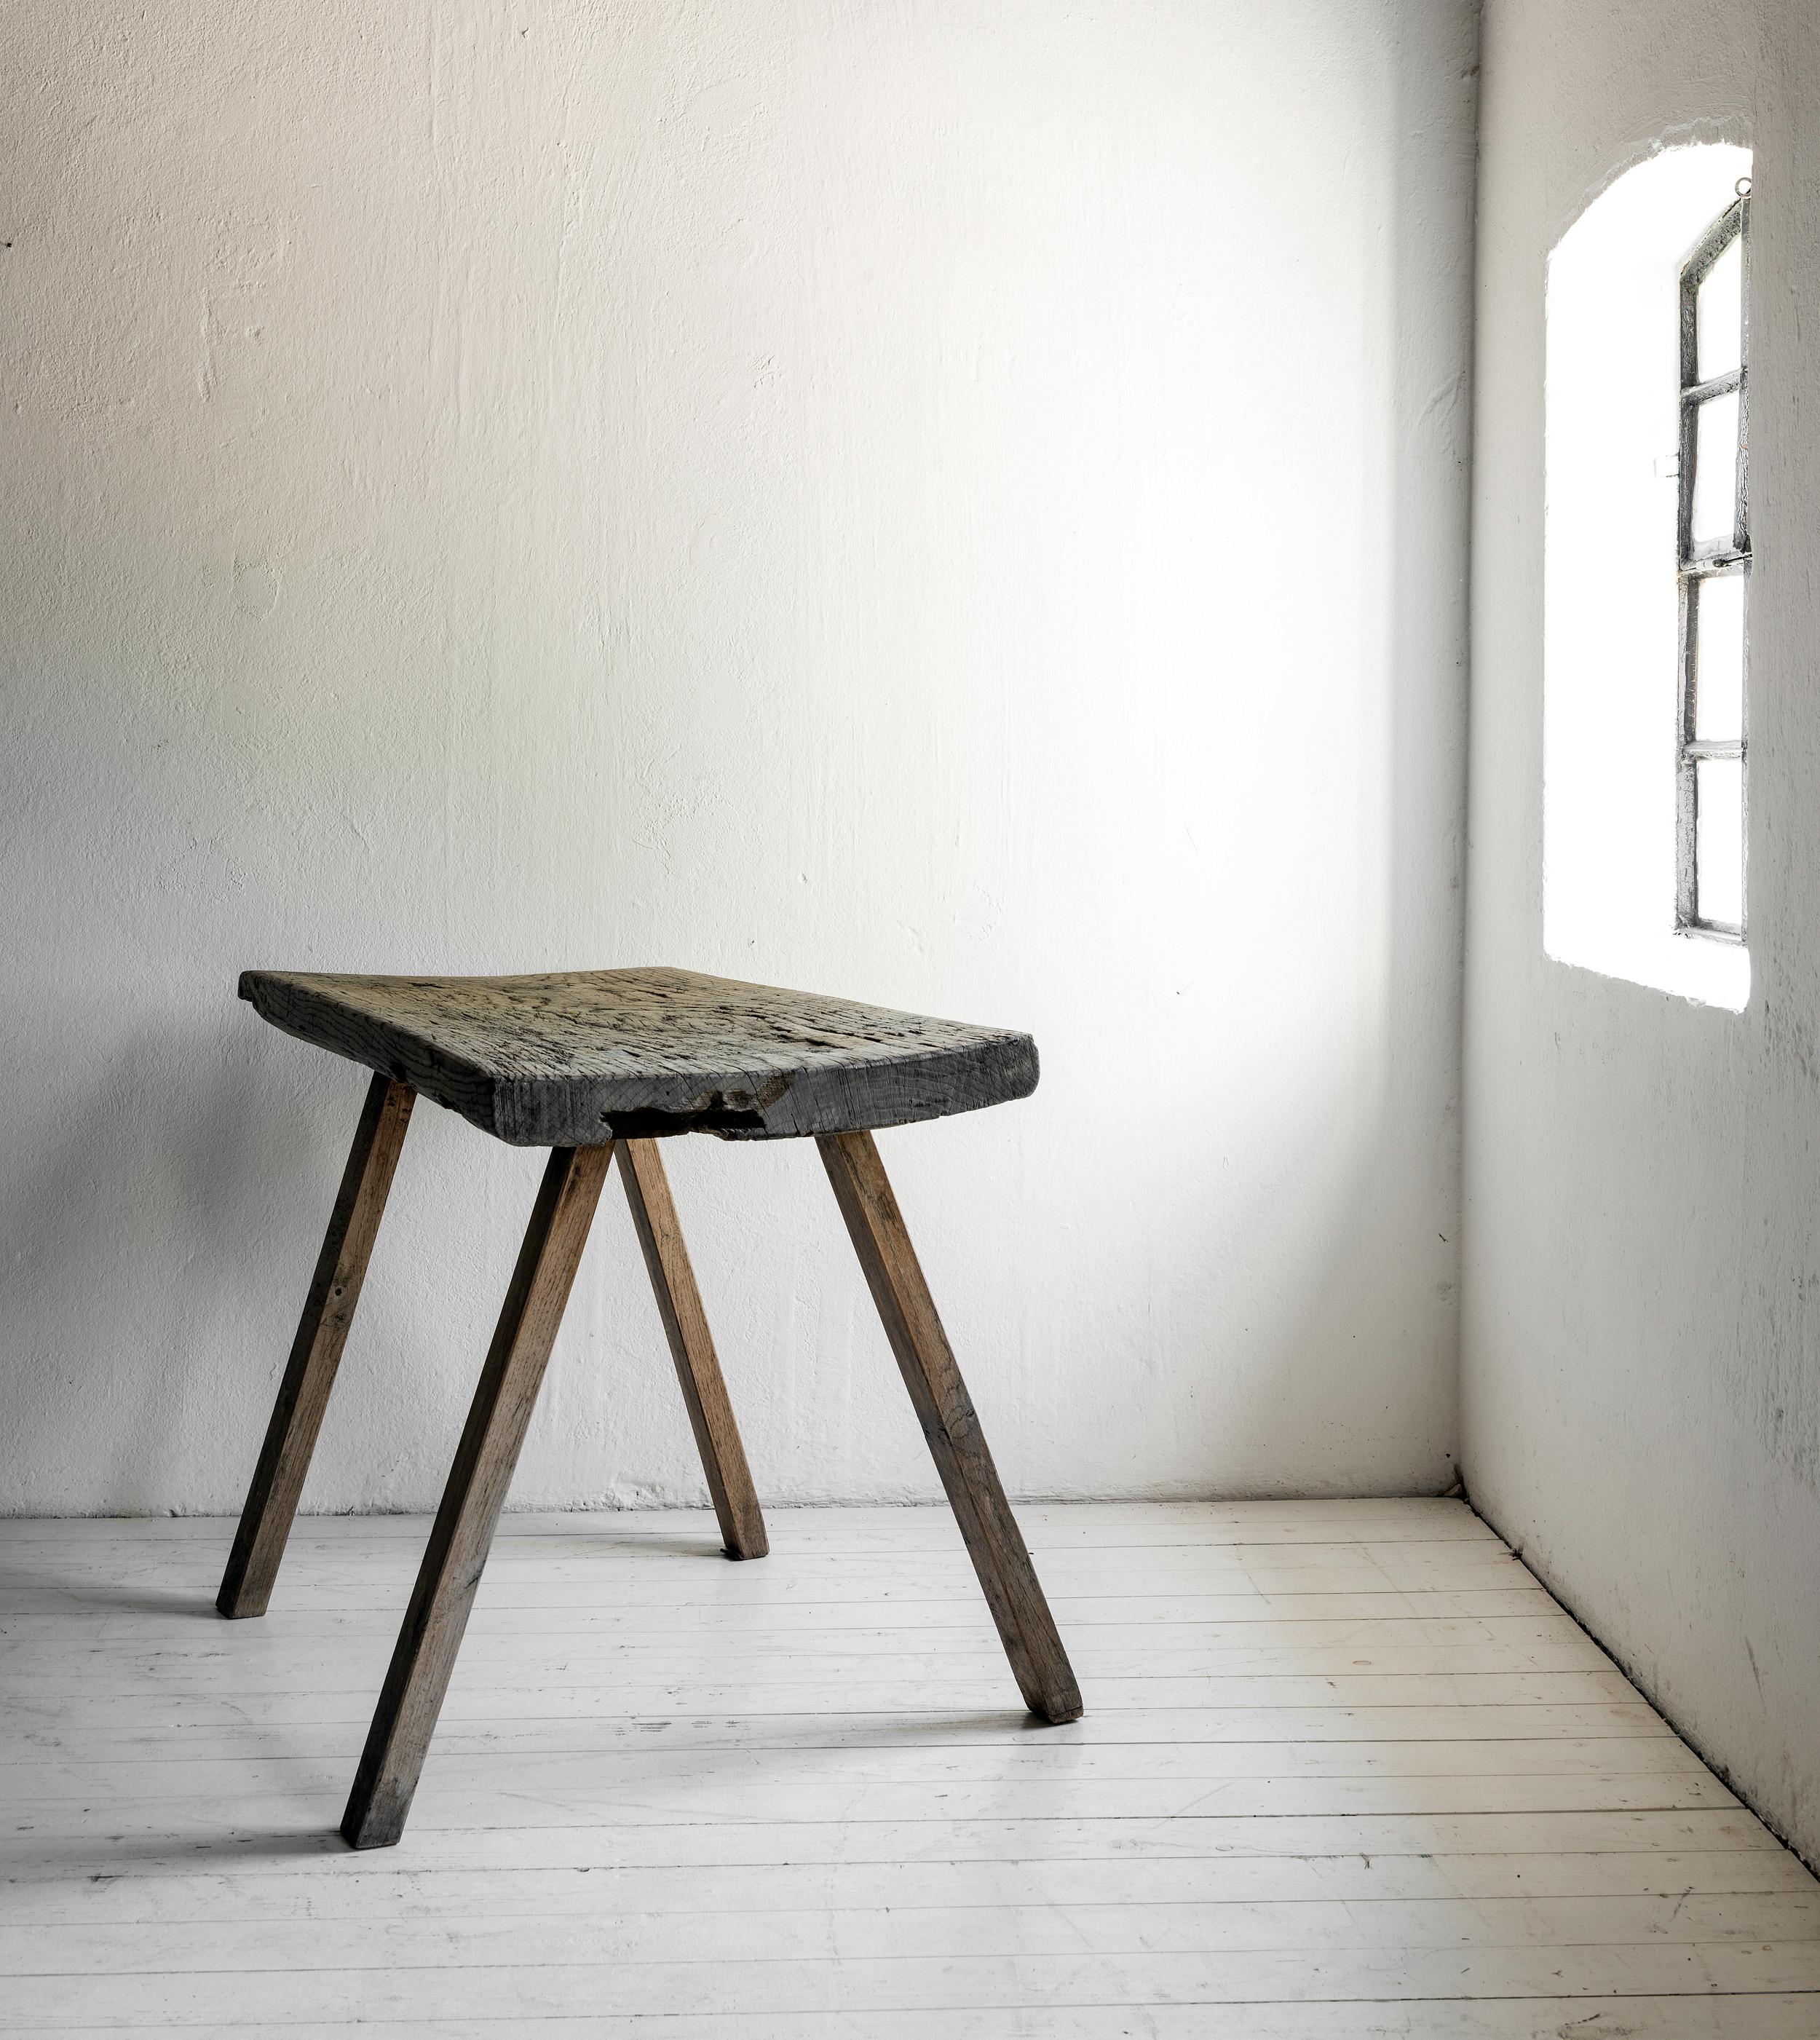 Oak Swedish 19th Century Primitive Minimalistic Table, Beautiful Patina